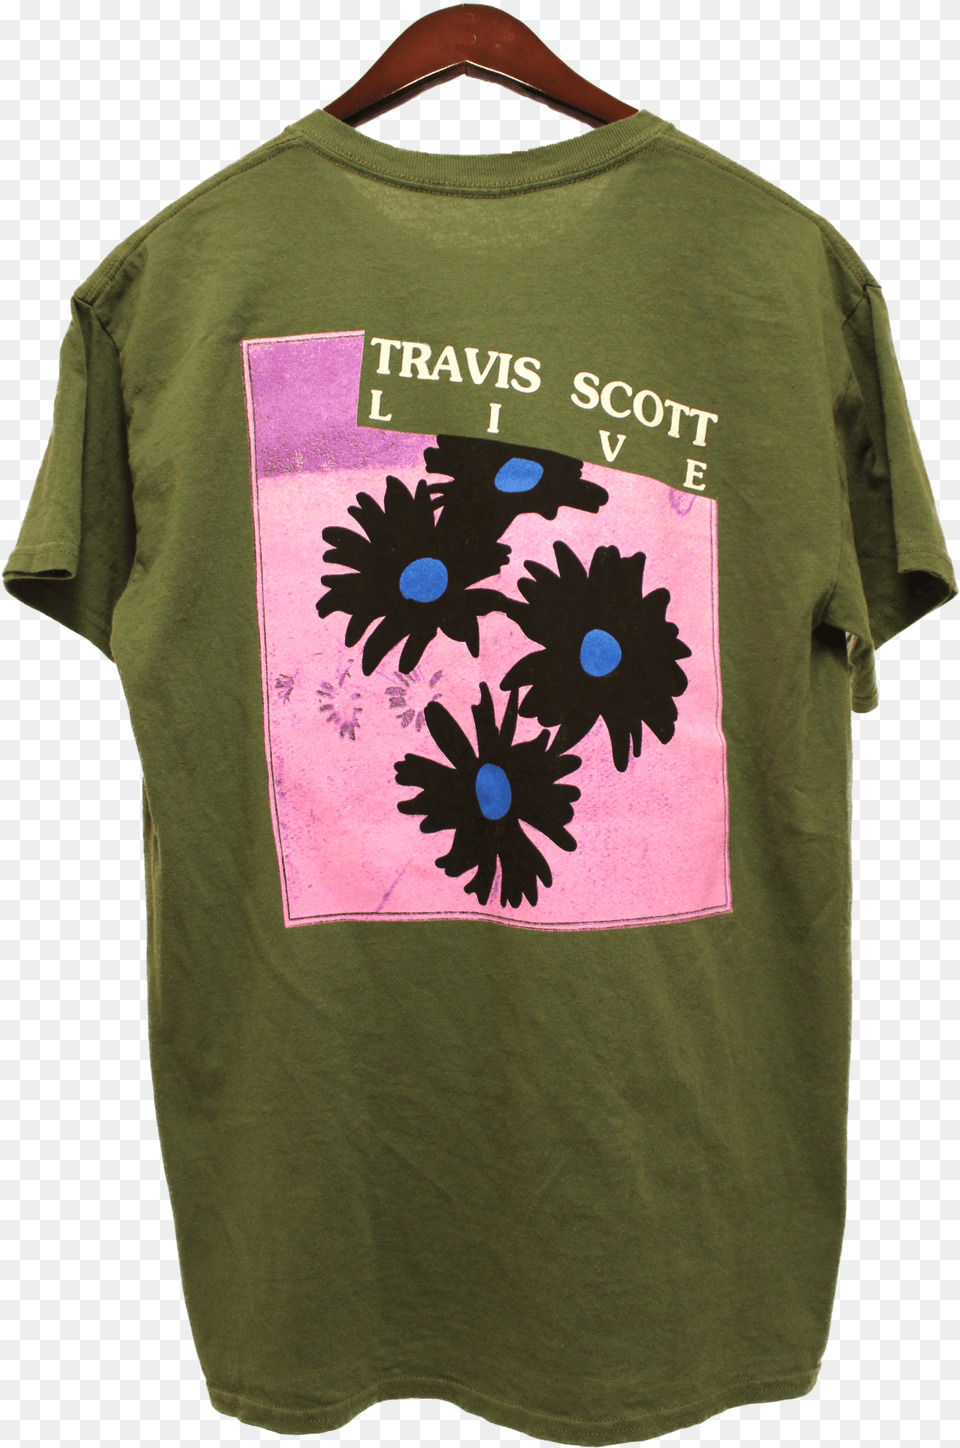 Look Up Travis Scott Flower Festival Shirt, Clothing, T-shirt Png Image